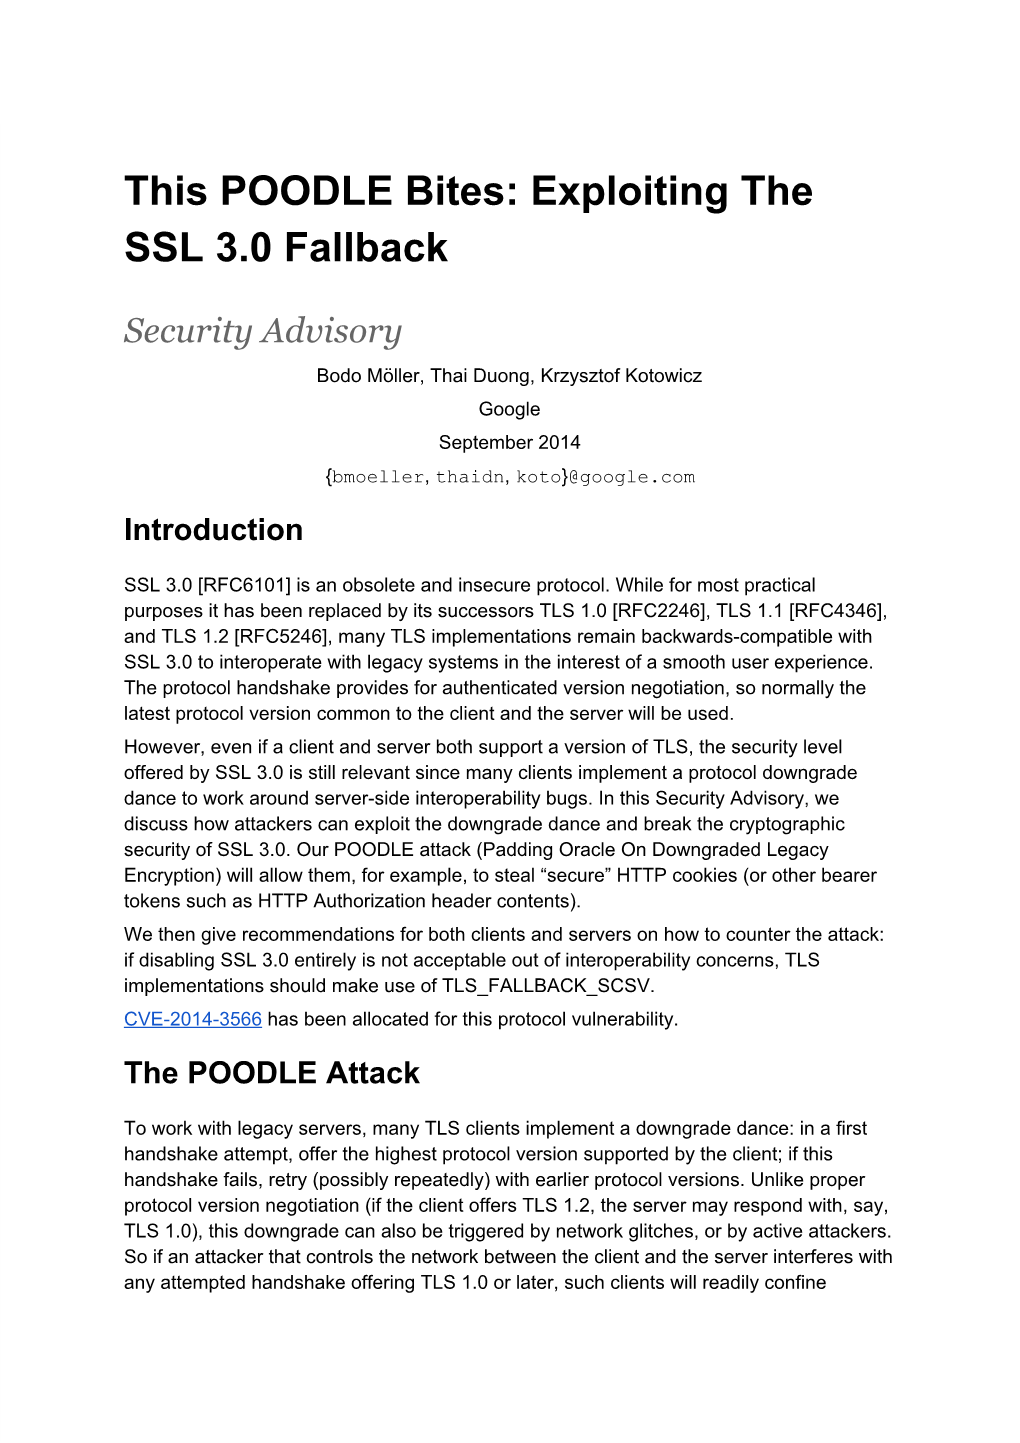 This POODLE Bites: Exploiting the SSL 3.0 Fallback